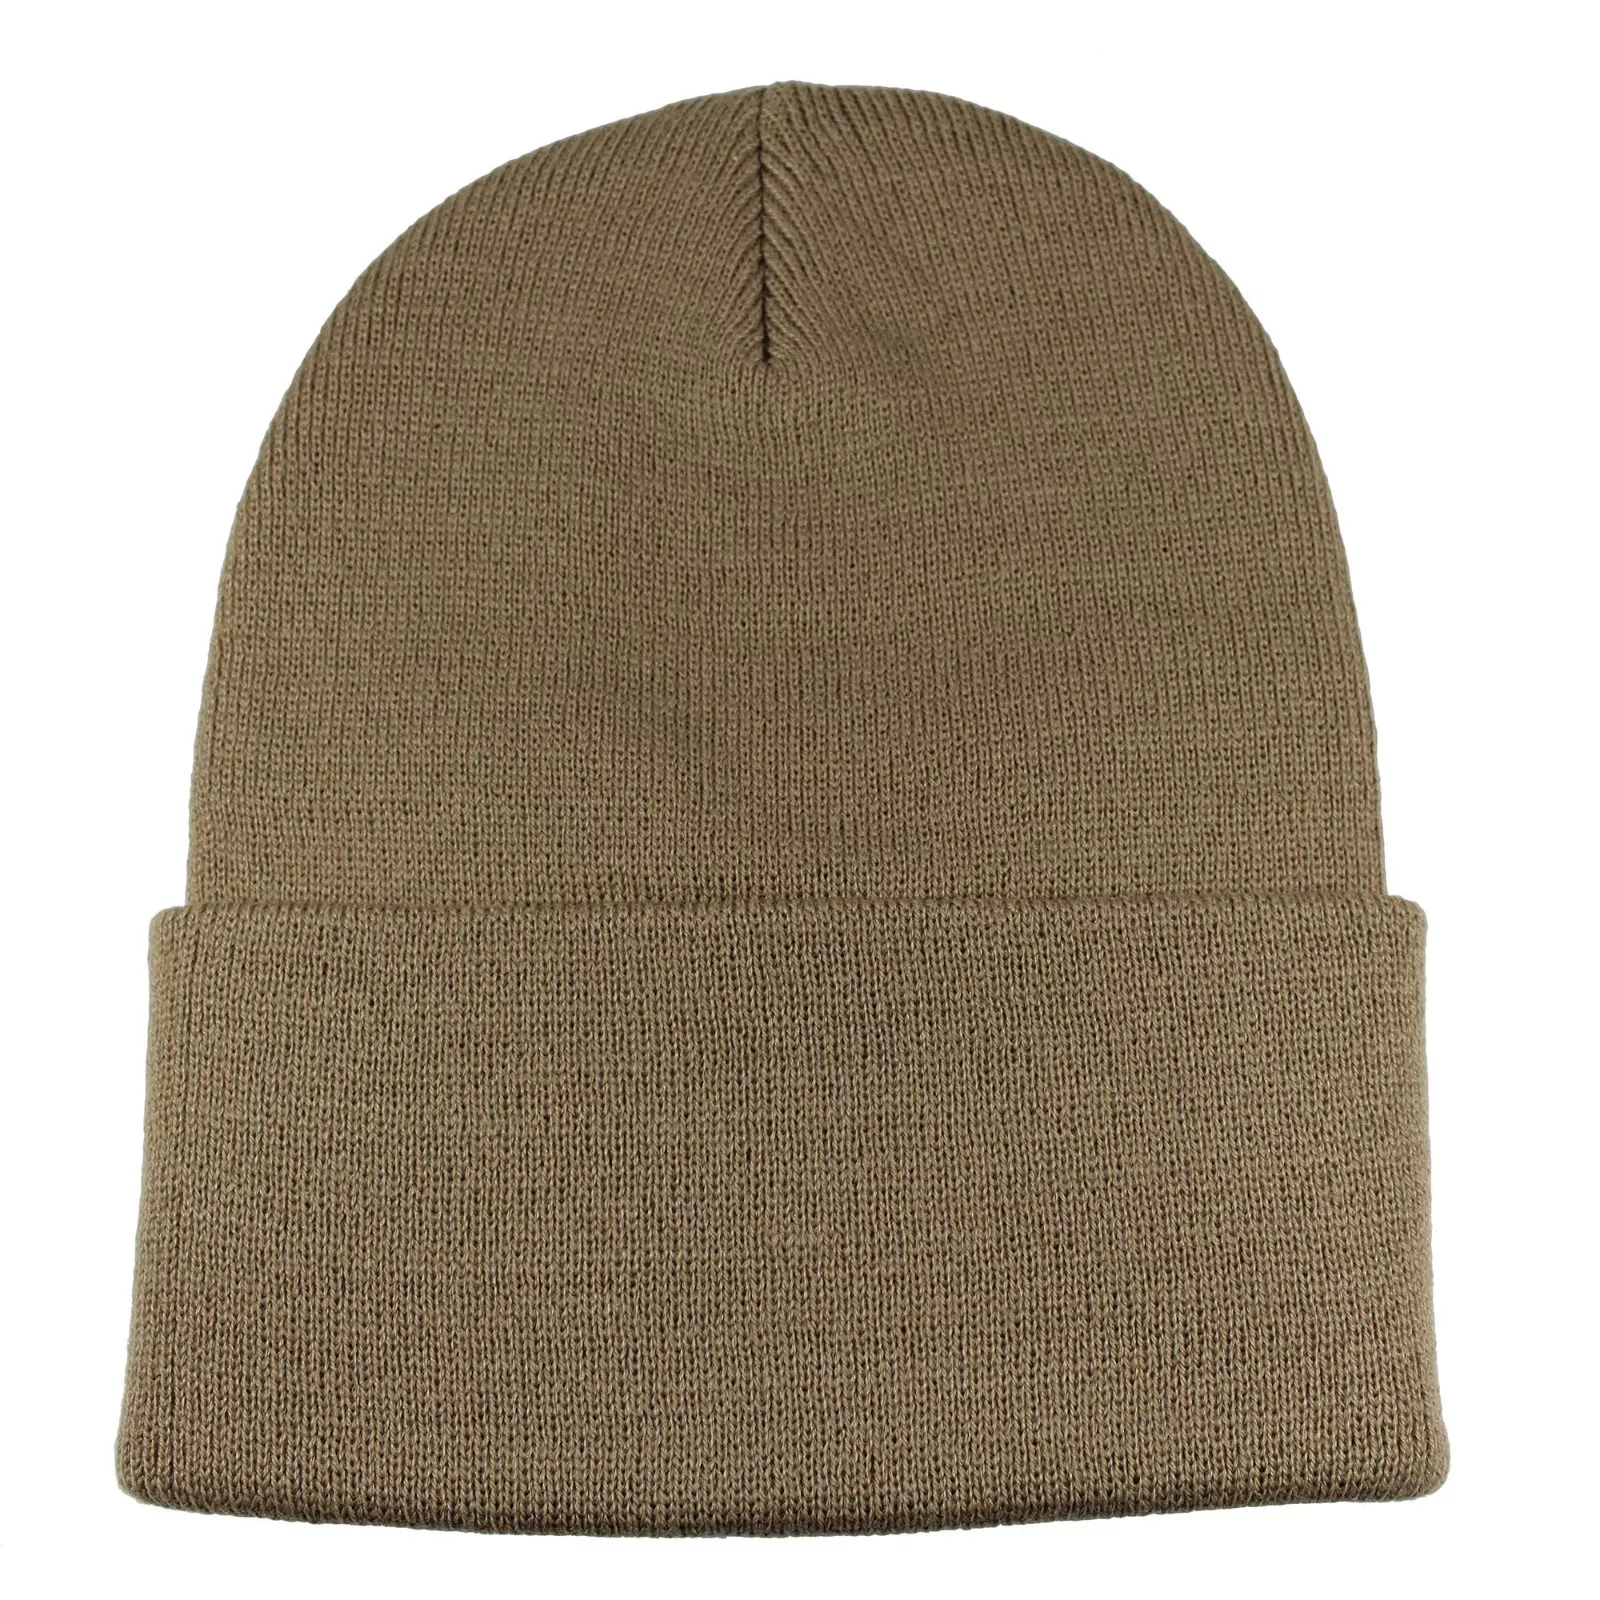 Unisex Plain Warm Knit Beanie Hat Cuff Skull Ski Cap Khaki1pcs - £7.96 GBP